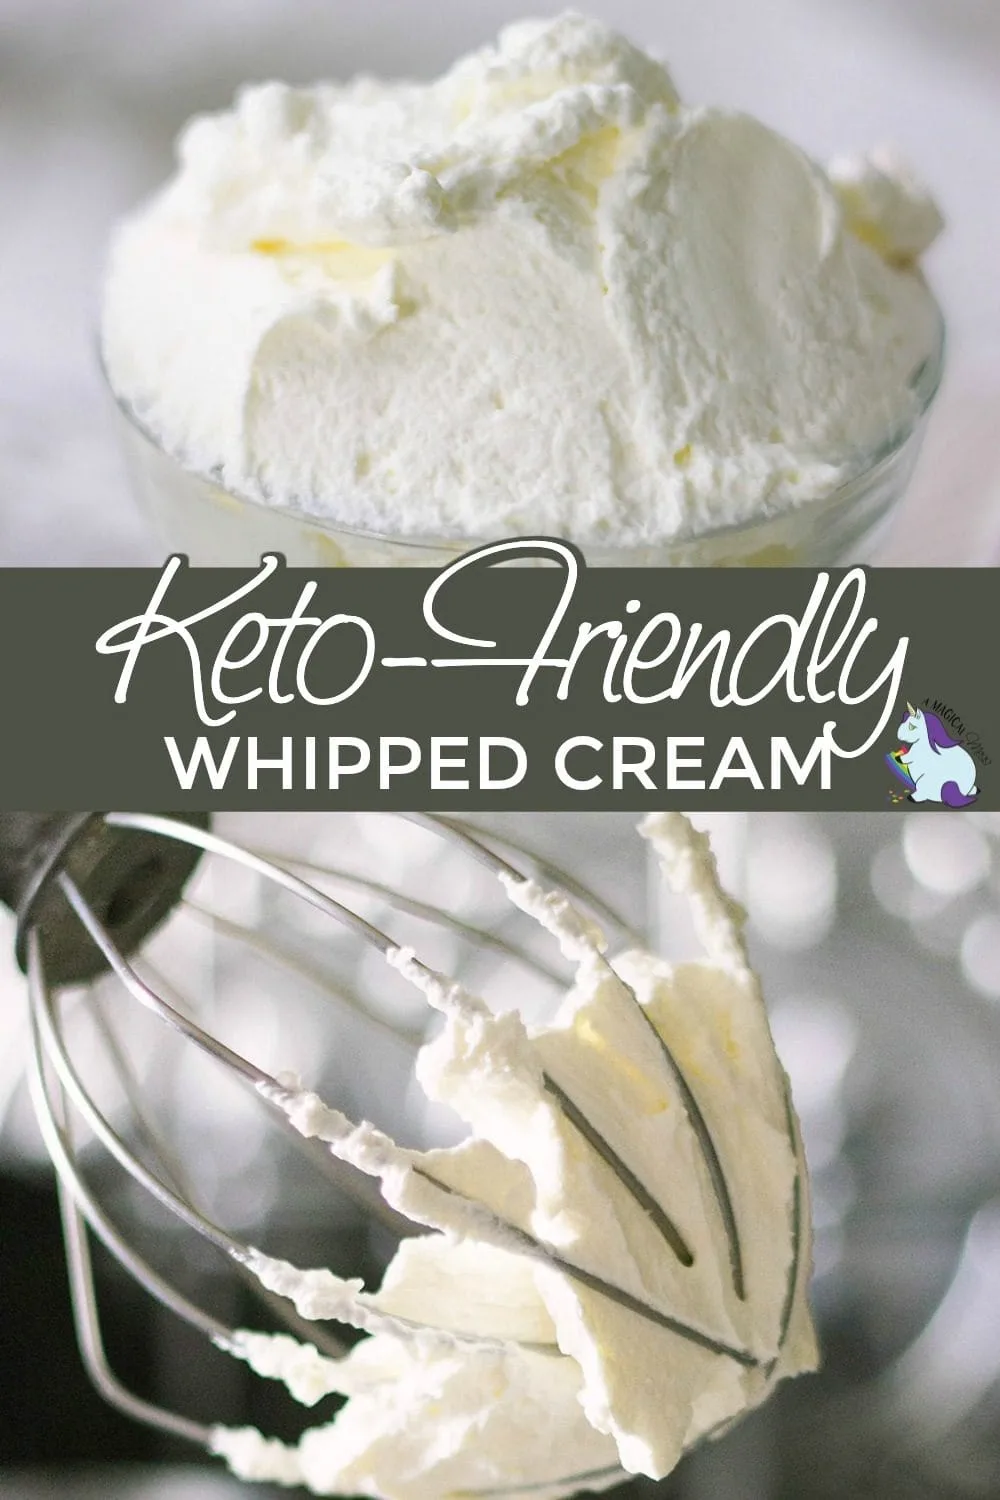 Keto-friendly homemade whipped cream